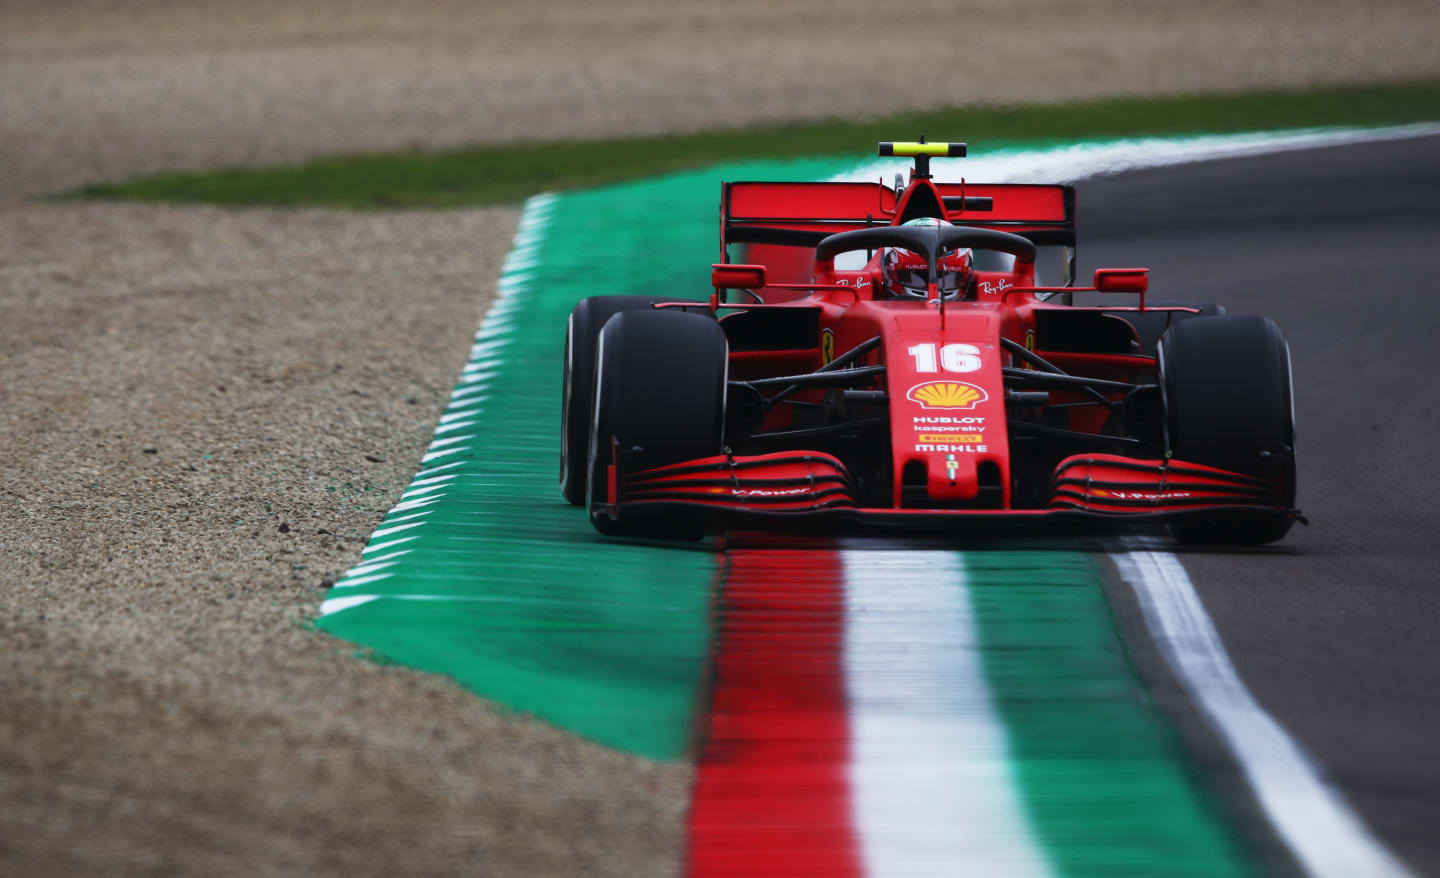 IMOLA, ITALY - NOVEMBER 01: Charles Leclerc of Monaco driving the (16) Scuderia Ferrari SF1000 on